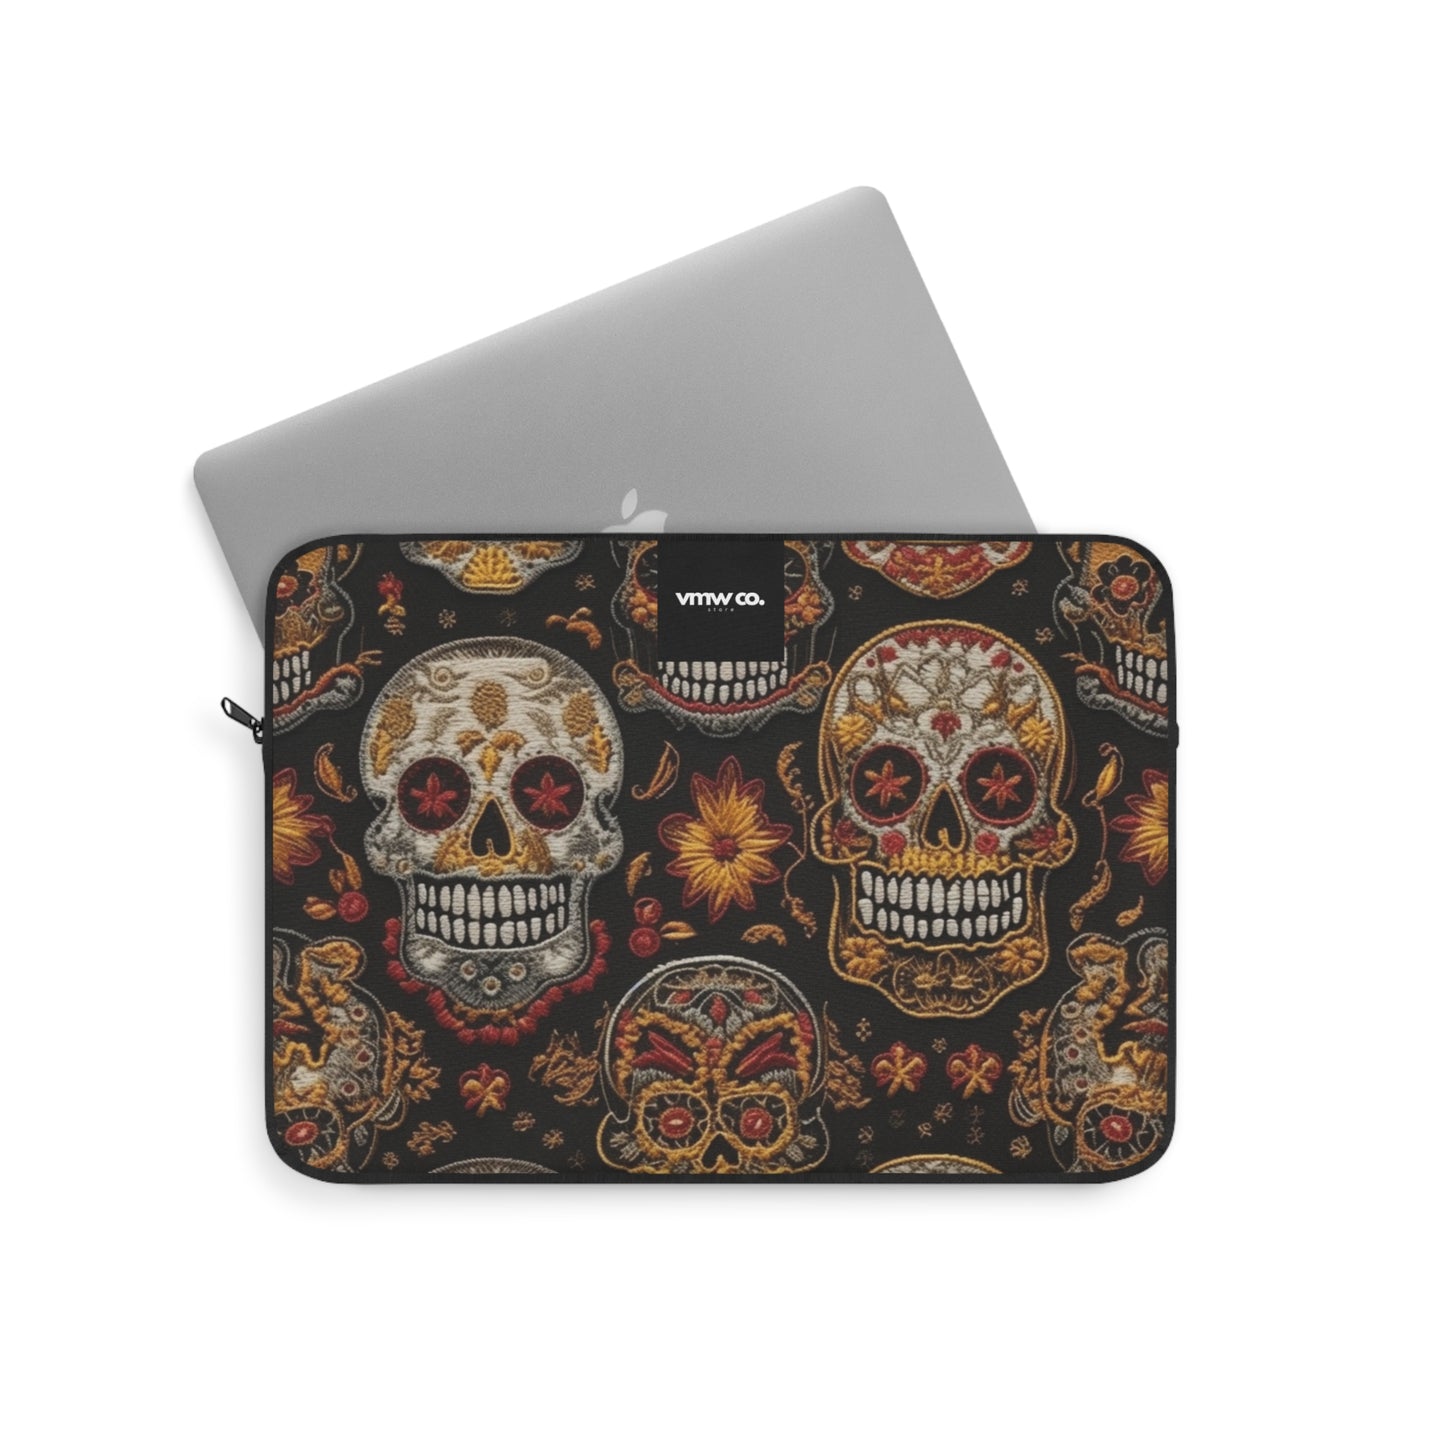 Embroidered Skulls Laptop Sleeve